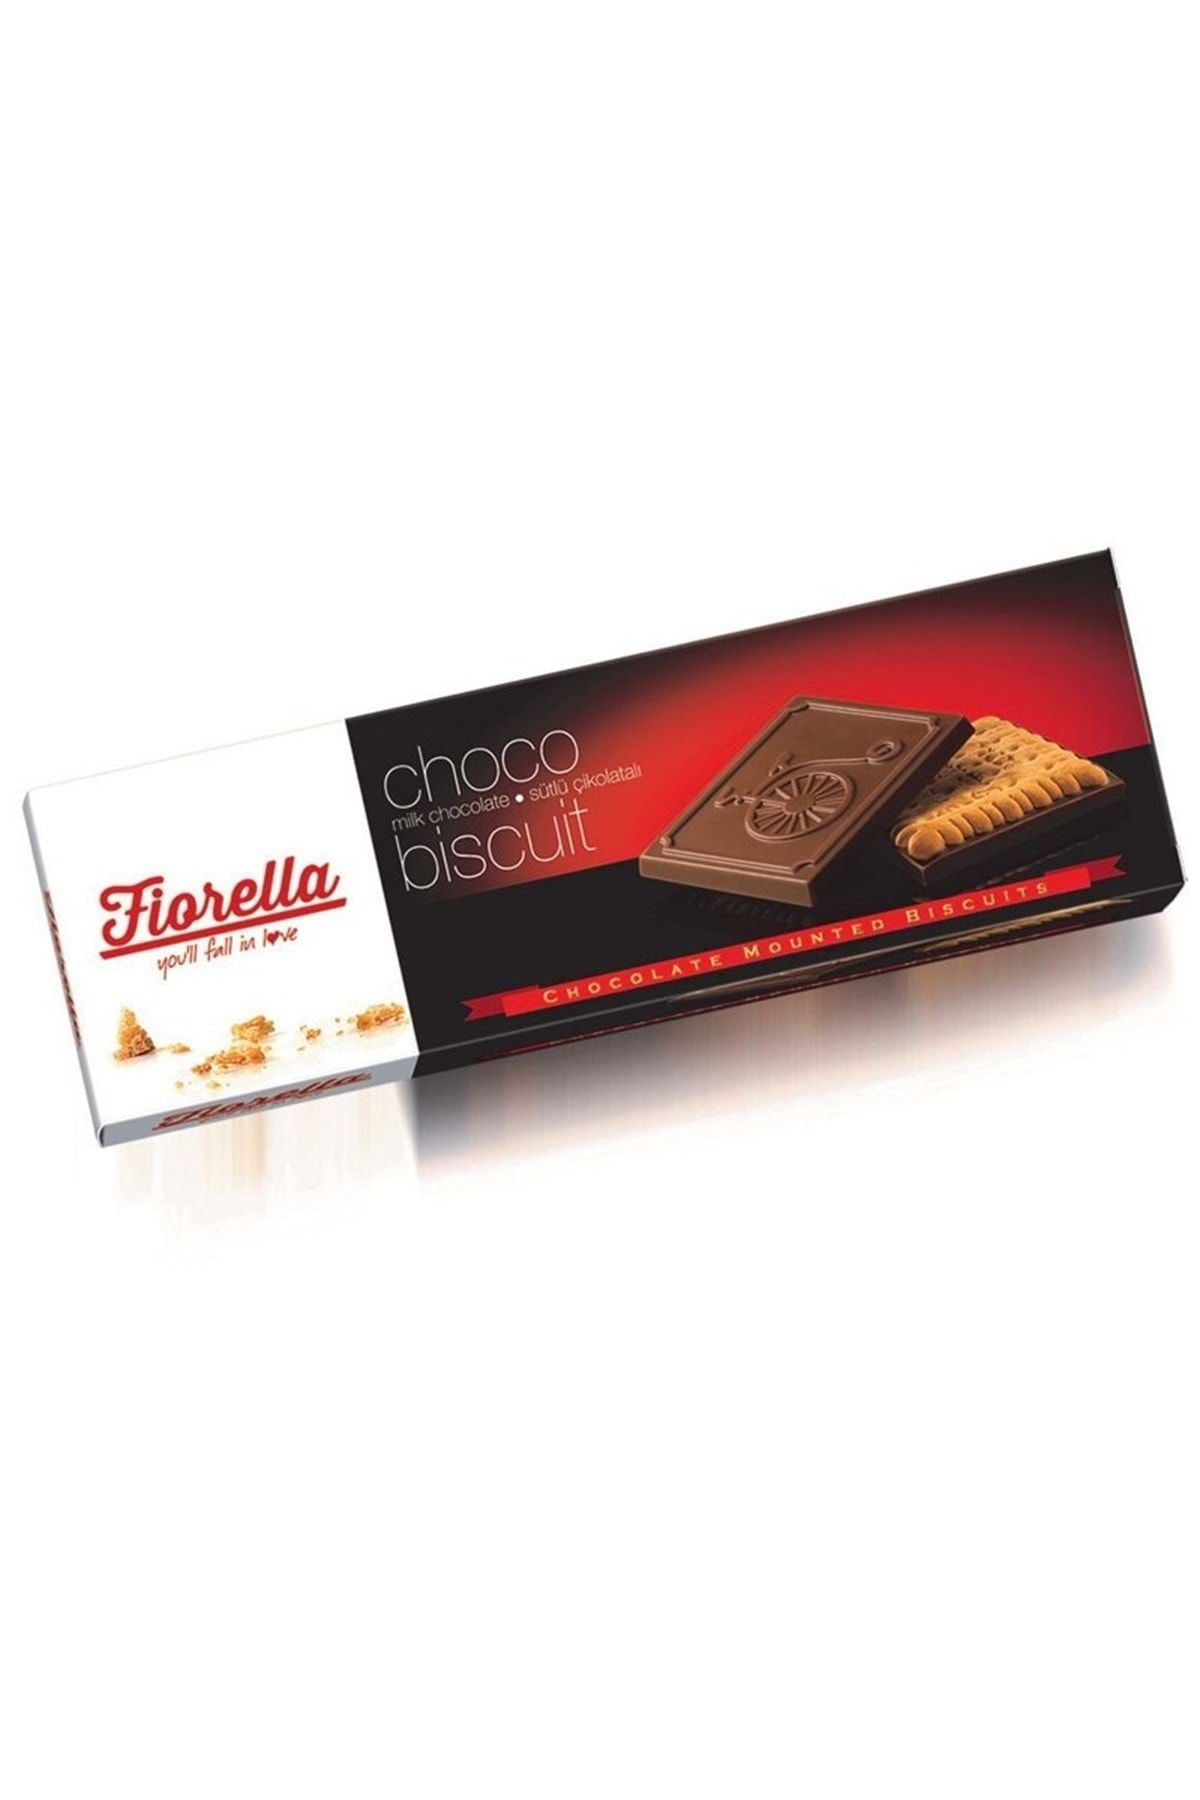 Fiorella Tasarım Elvan Fiorella Sütlü Çikolatalı Bisküvi 102g